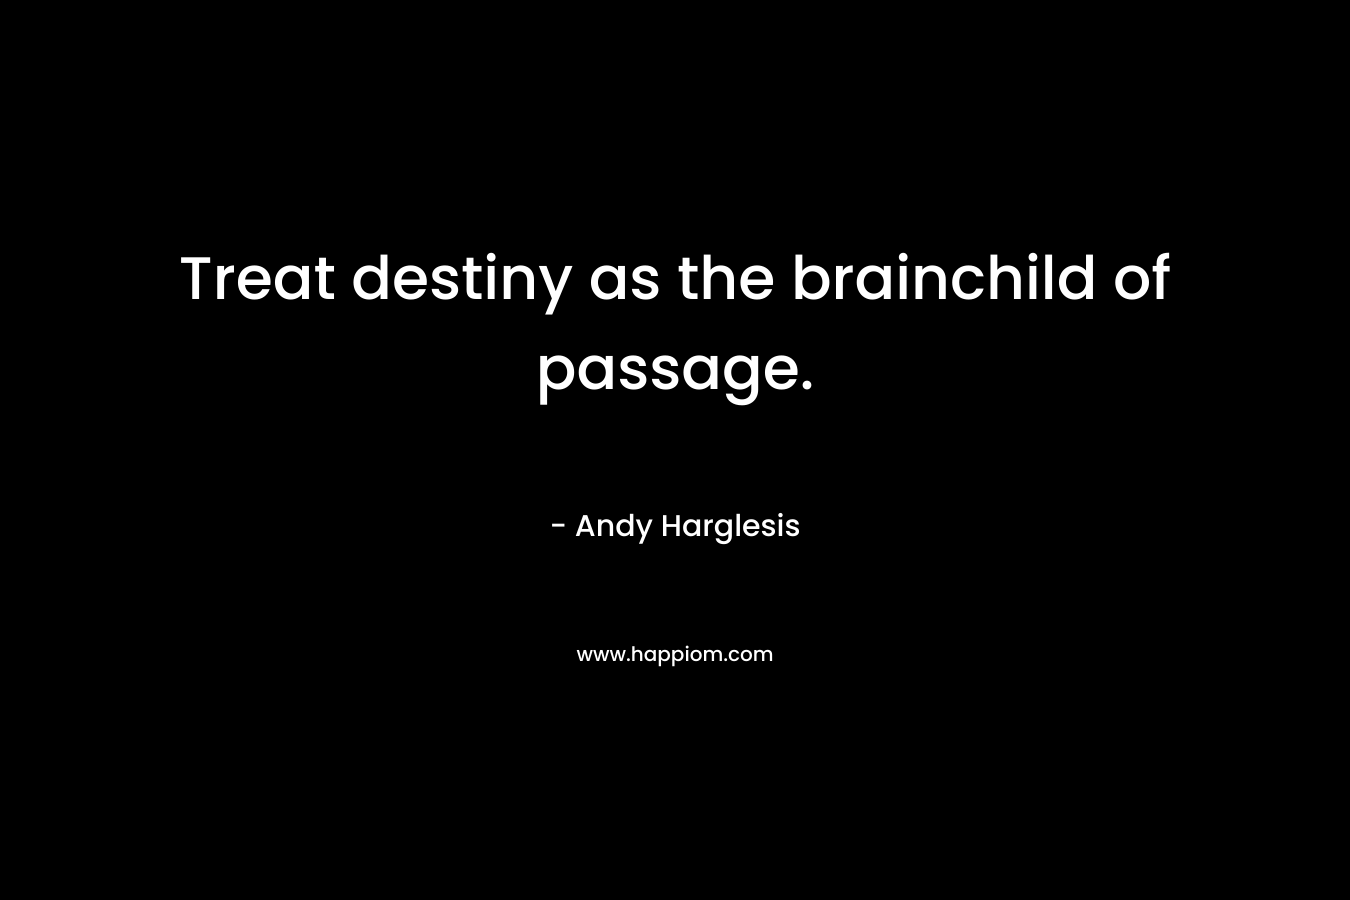 Treat destiny as the brainchild of passage.